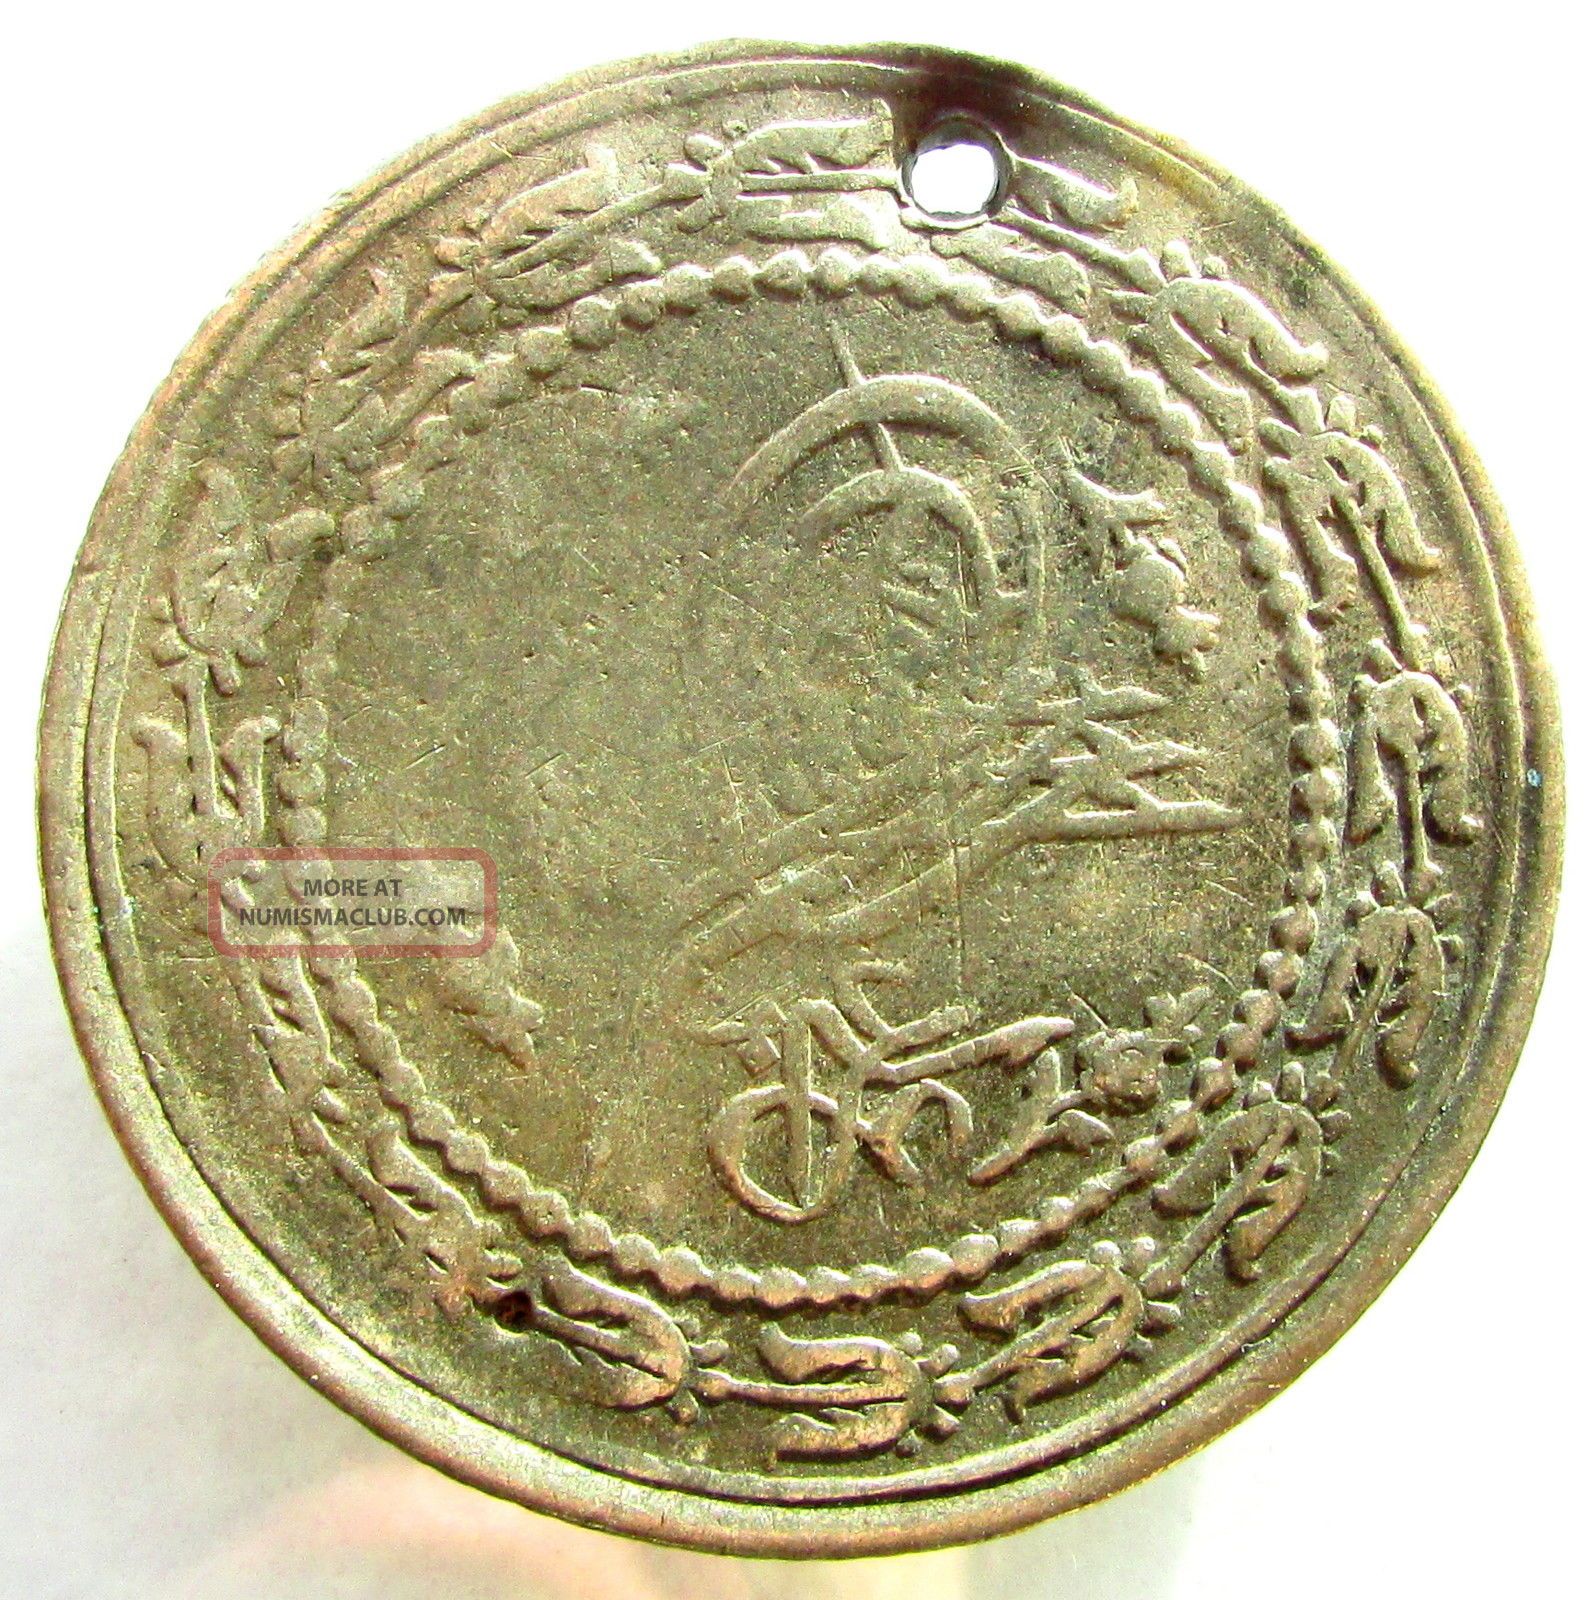 & Large Ottoman - Islamic - Silver Coin Pendant - 13 Grams, 36 Mm - L35